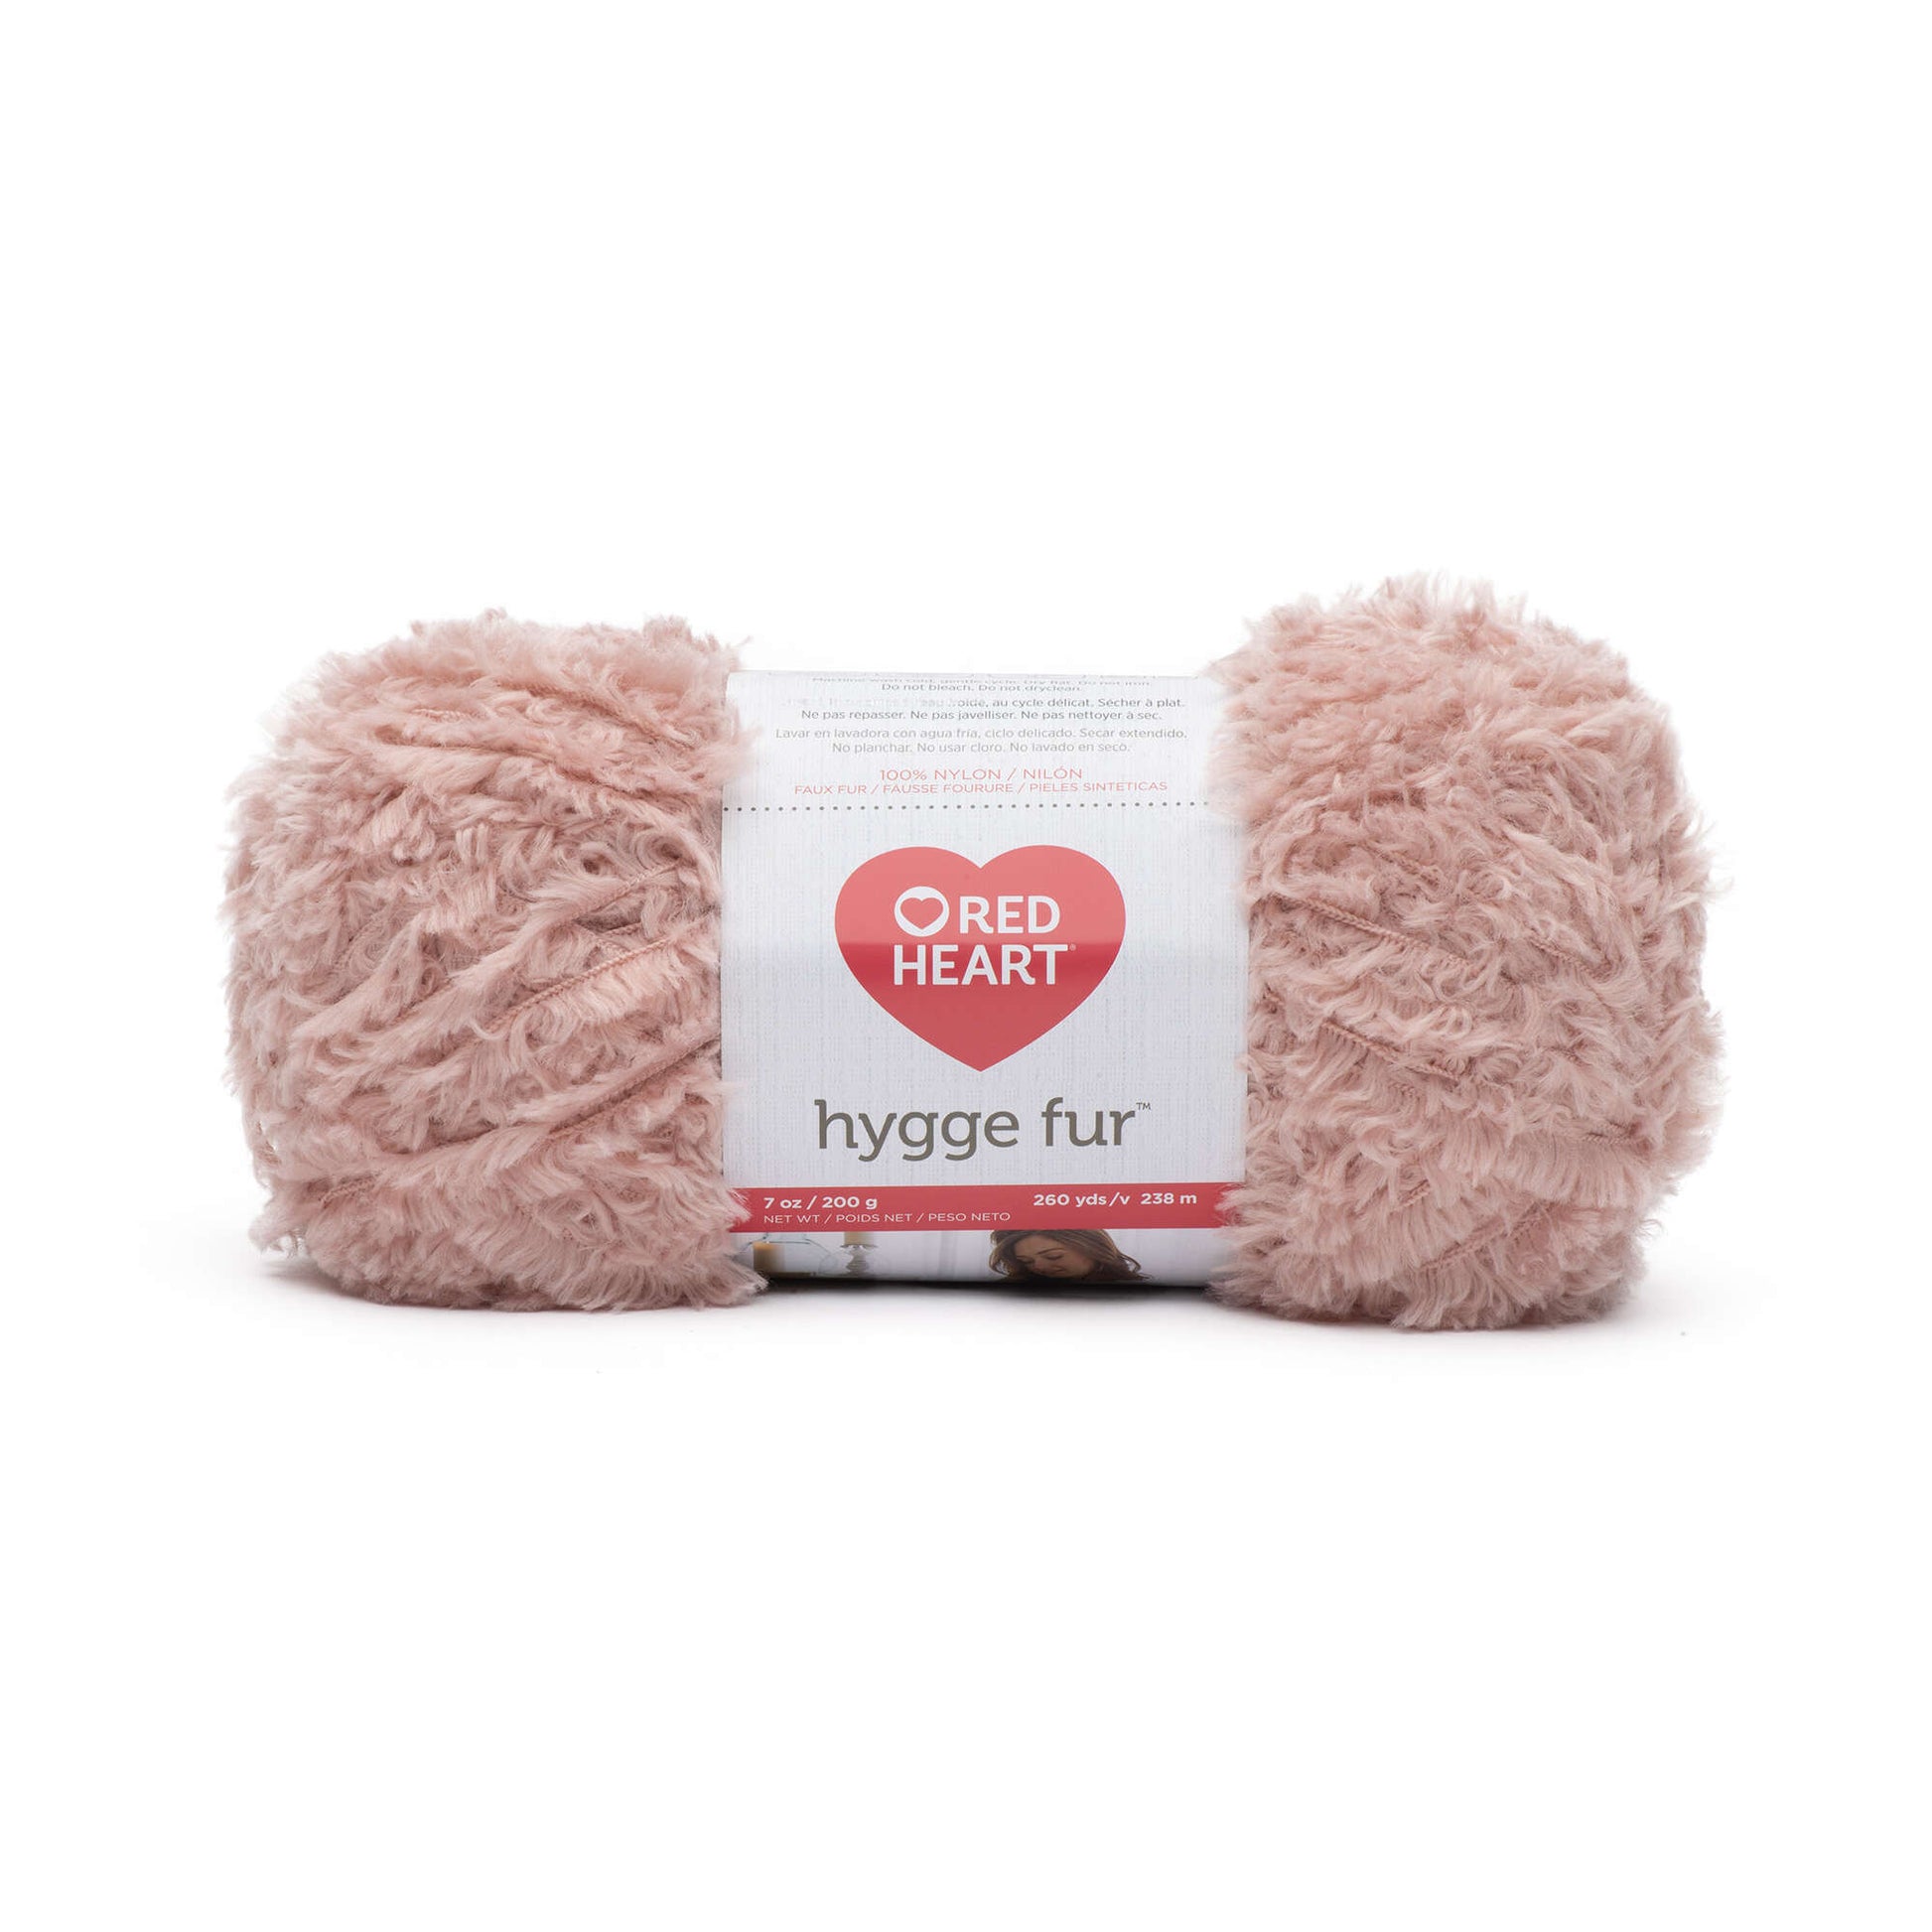 Red Heart Hygge Fur Yarn - Discontinued shades